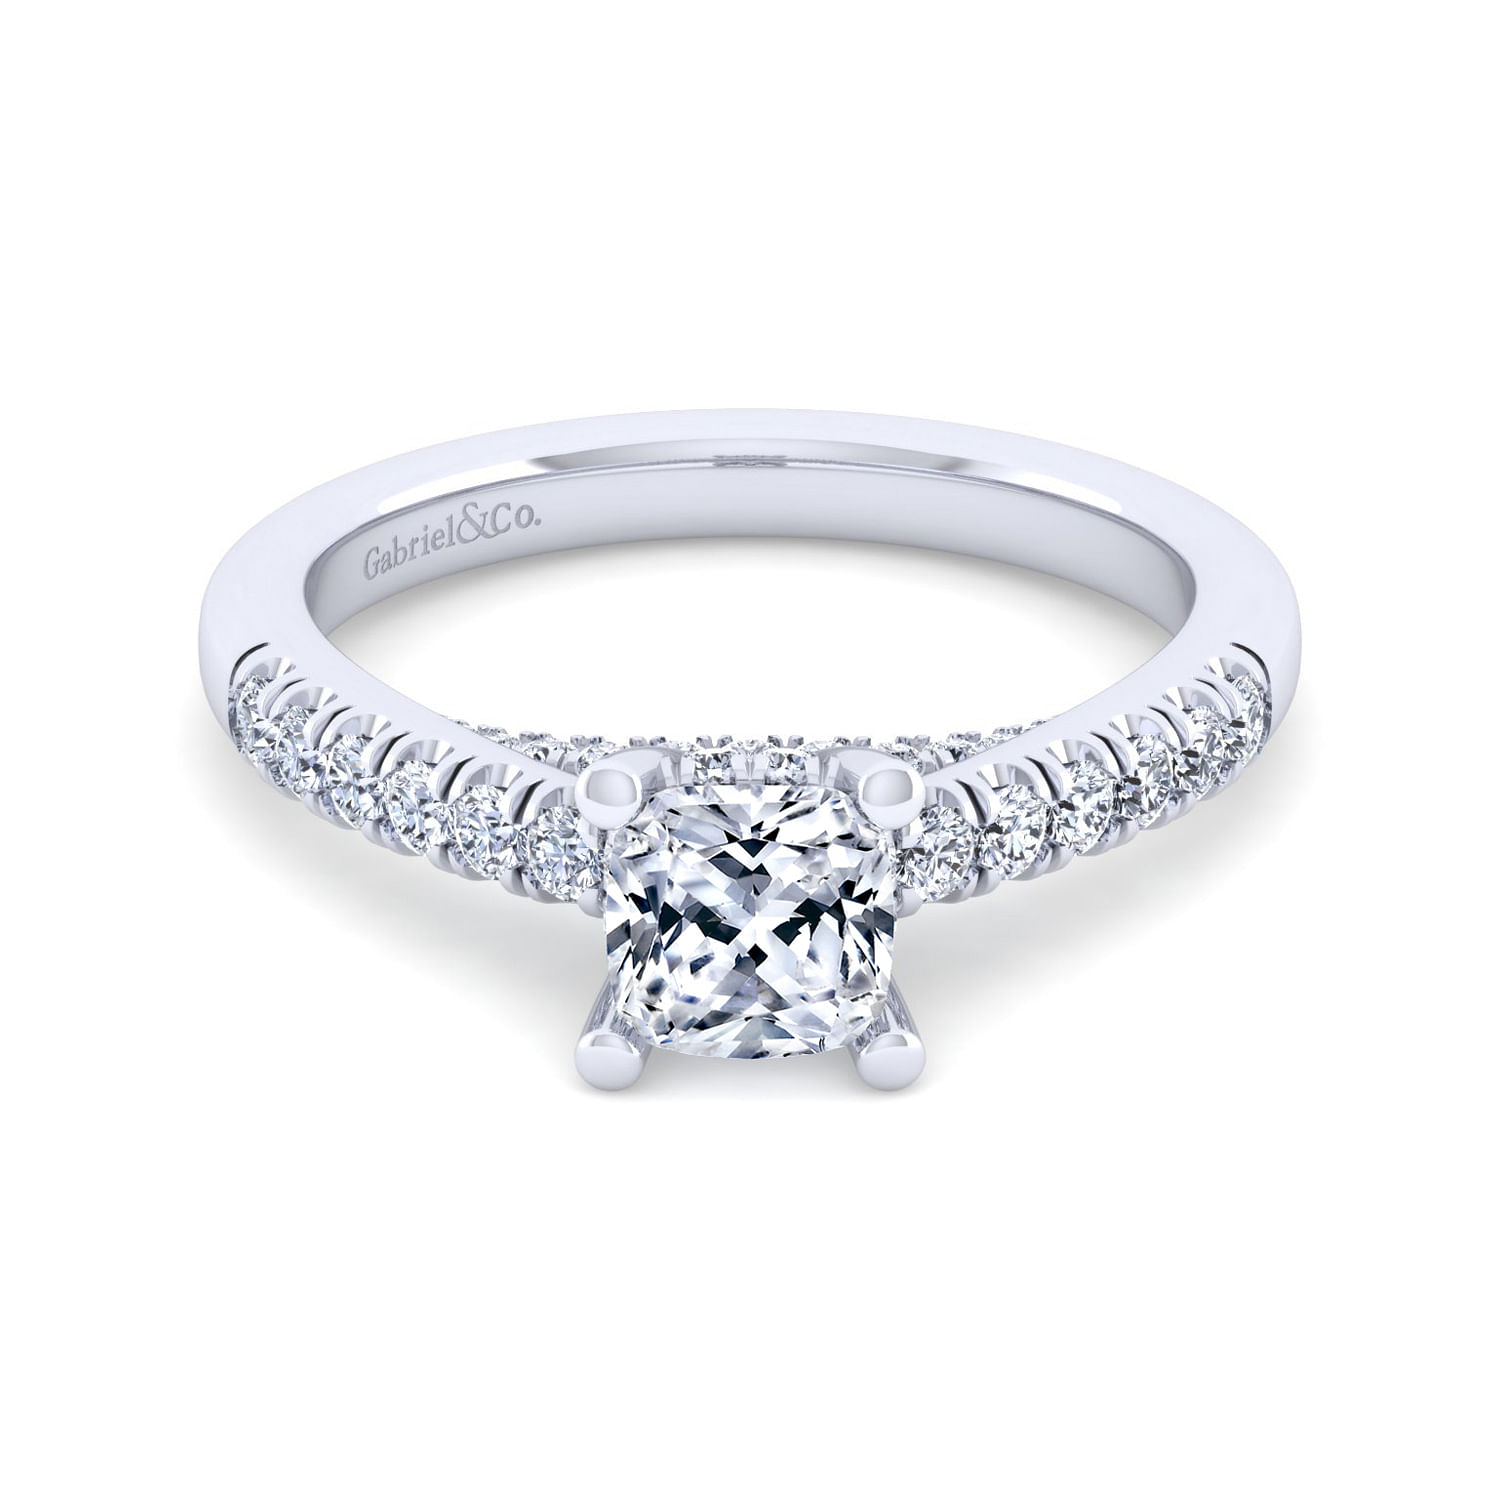 Jones - 14K White Gold Cushion Cut Diamond Engagement Ring